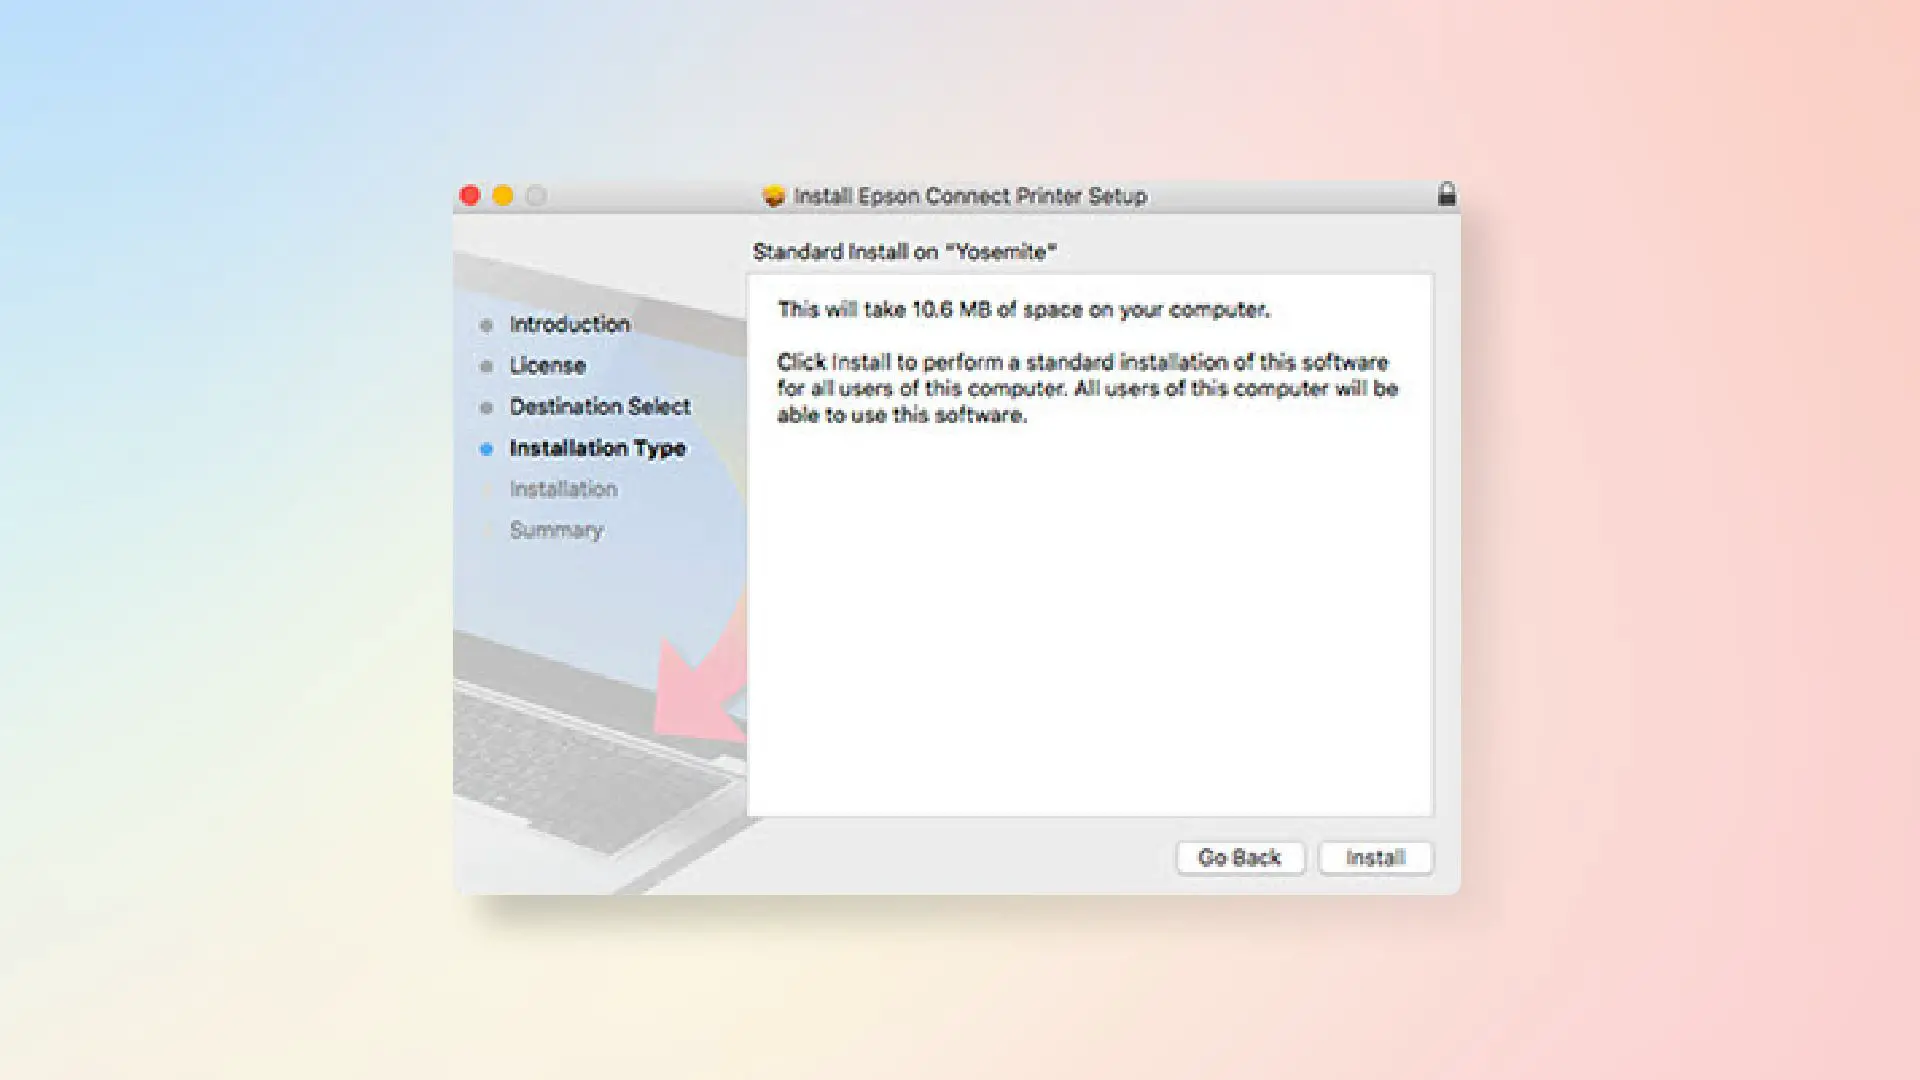 Epson Printer Setup Utility setup interface on Mac